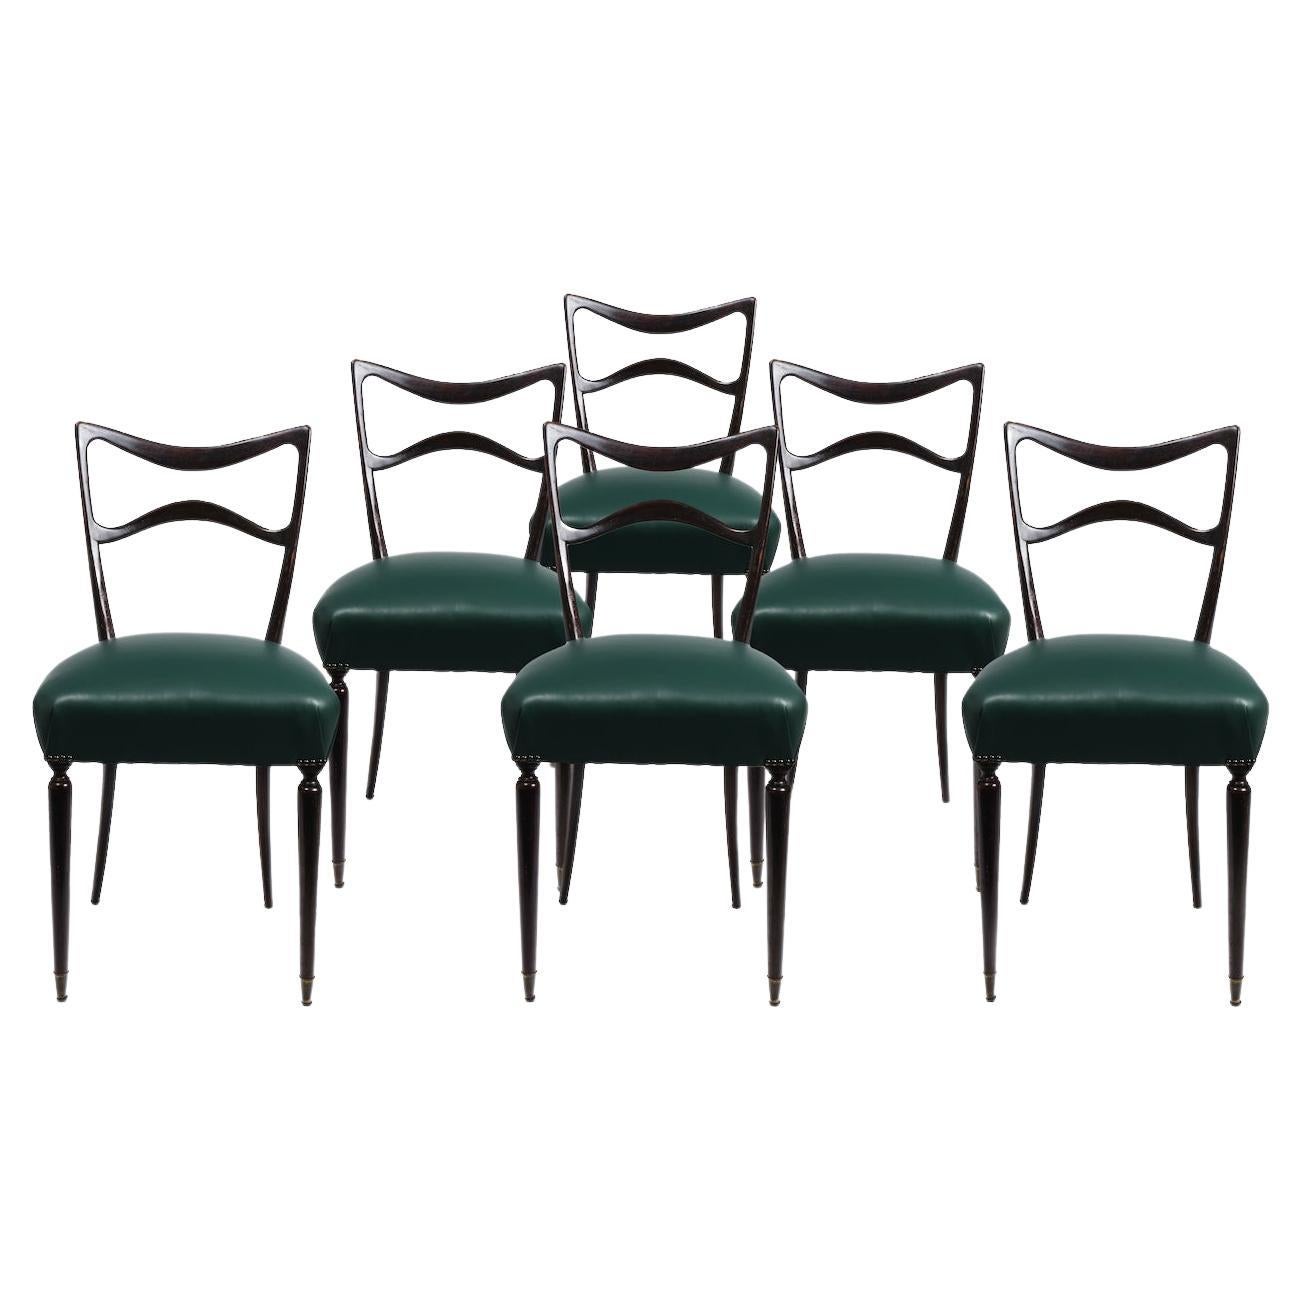 Set of Six Mid-Century Italian Design Chairs, 1950s